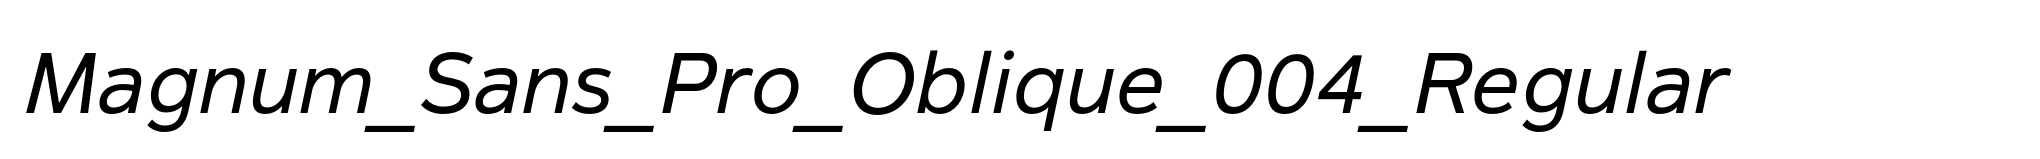 Magnum_Sans_Pro_Oblique_004_Regular image